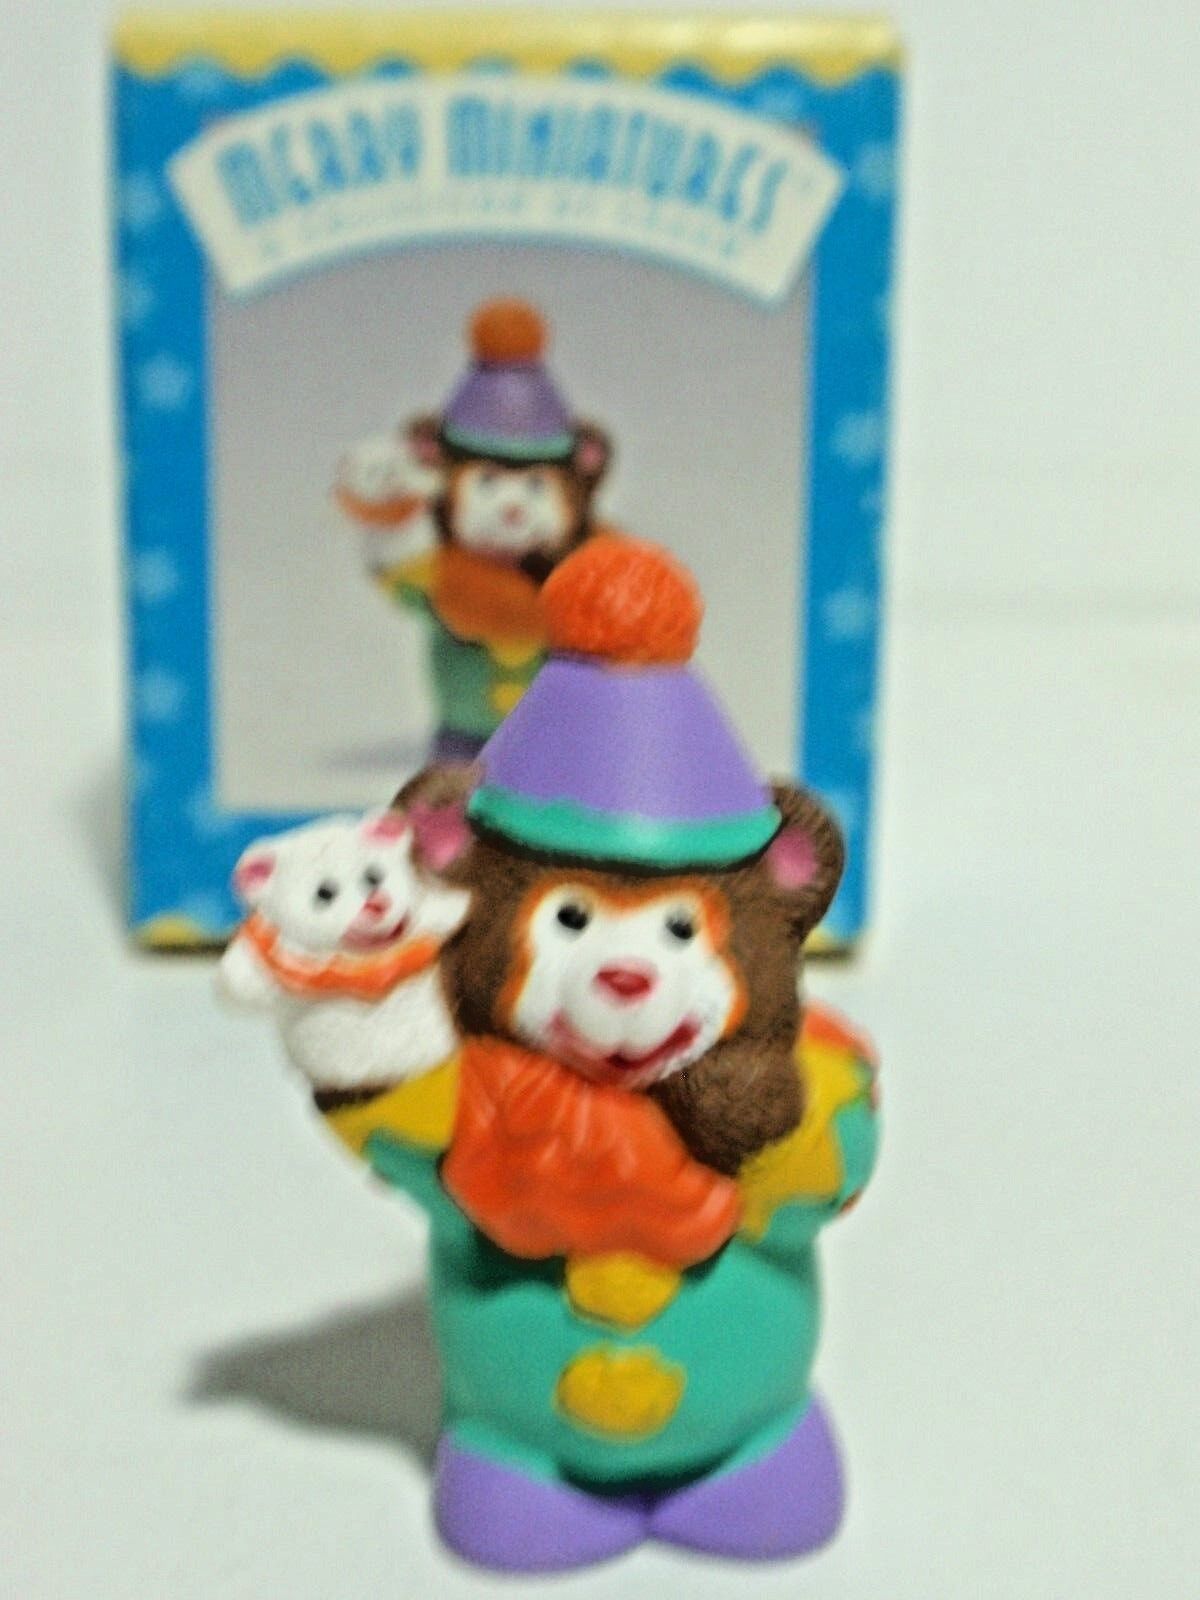 Happy birthday Clowns hallmark merry miniatures 1 pc #3 1997 bear QSM8565 MIB